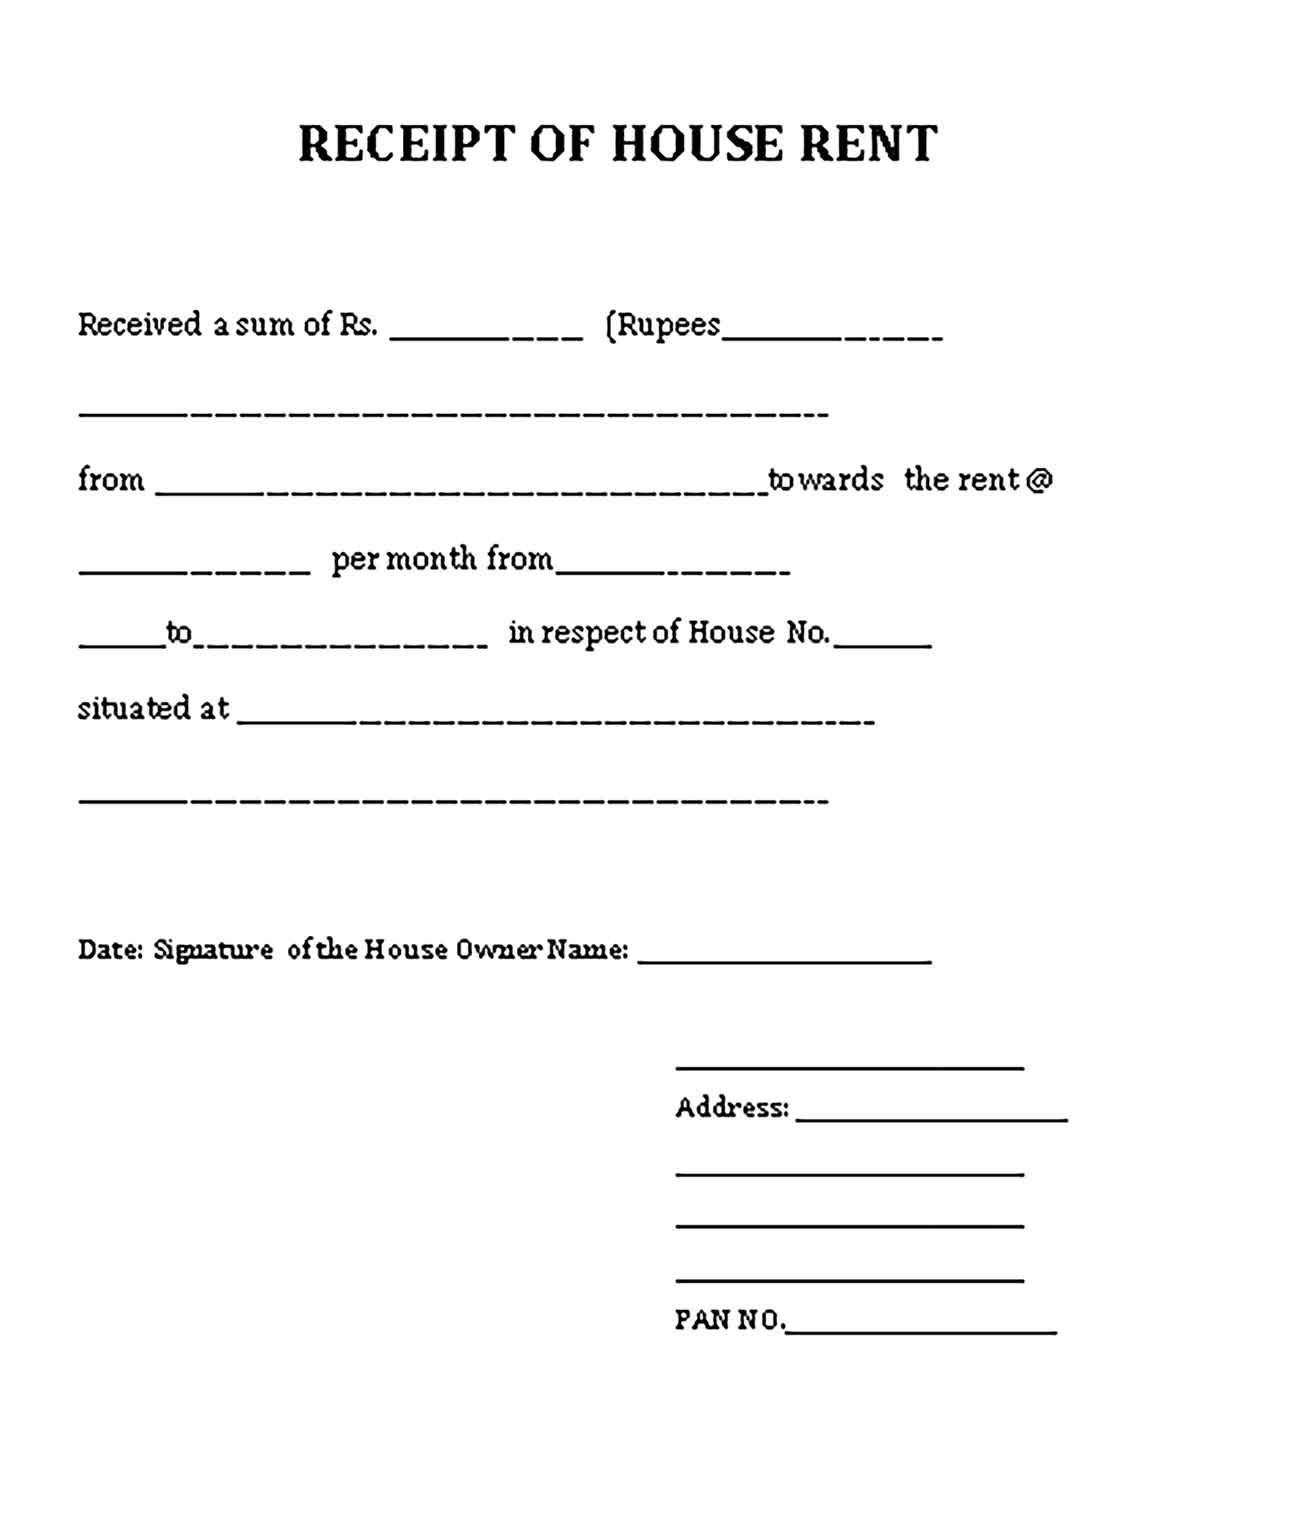 Sample House Rent Receipt Templates 3